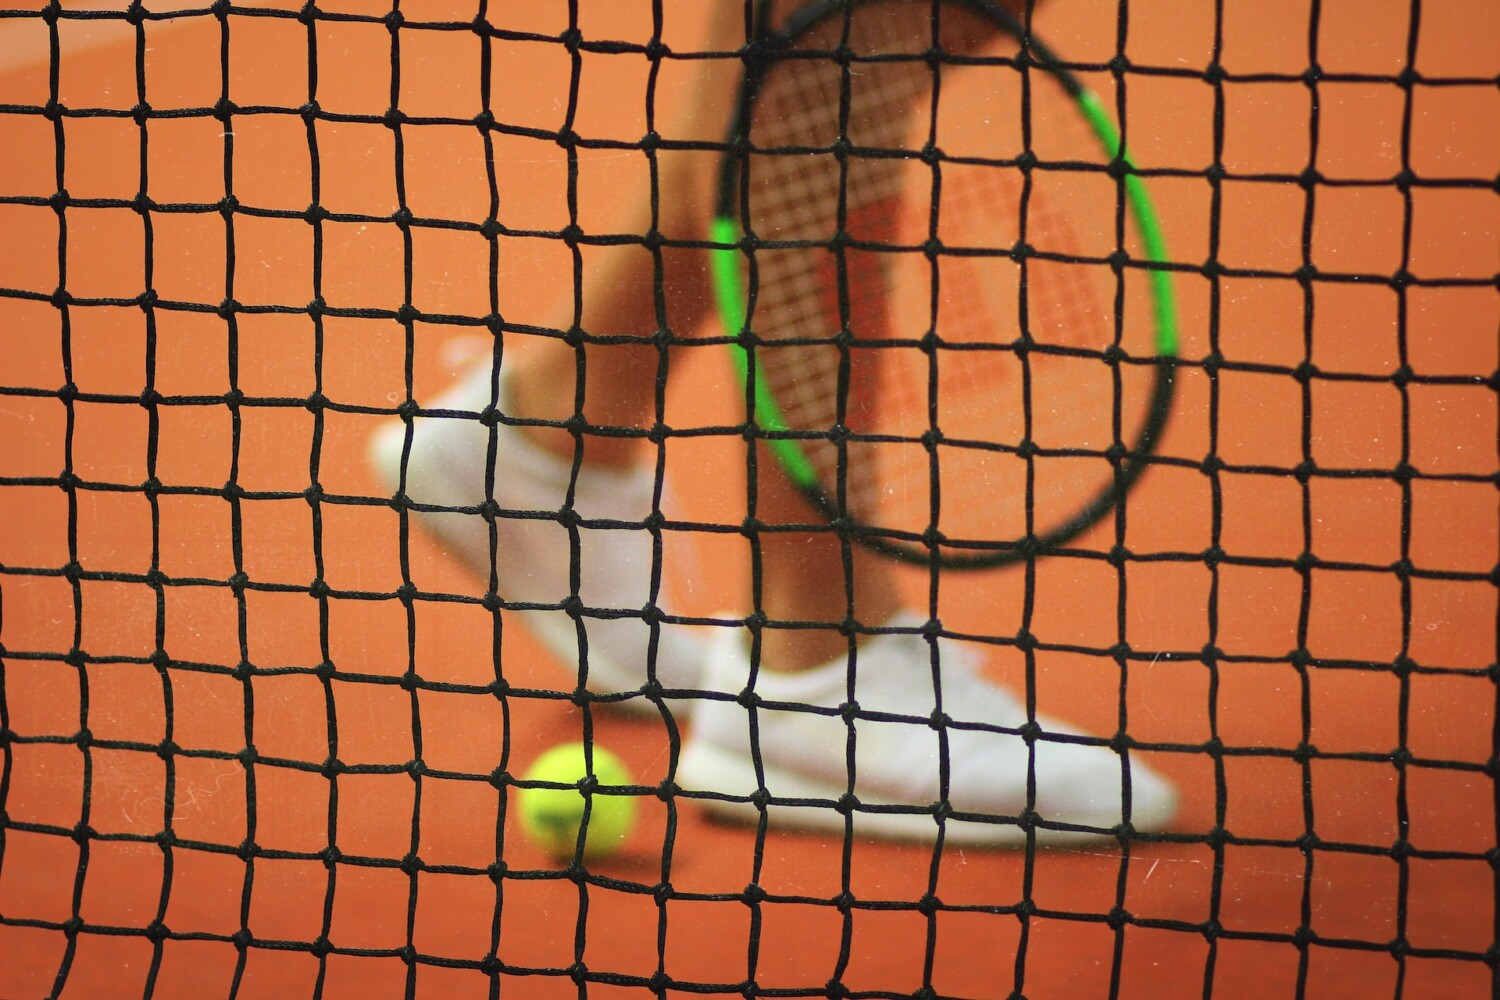 Тенис на корт